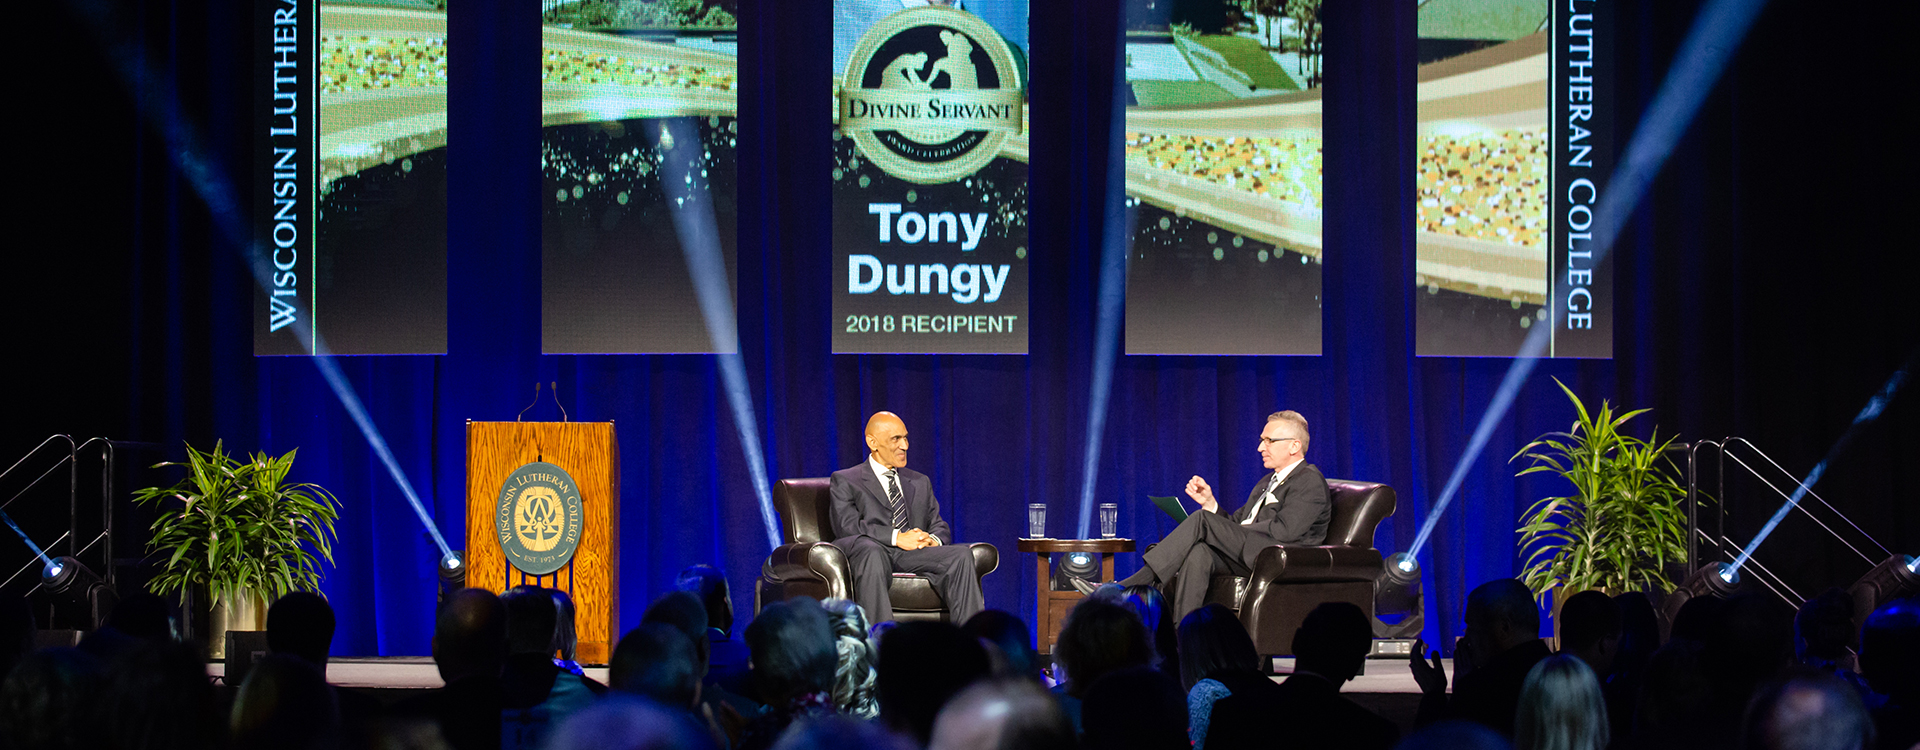 Tony Dungy Receives Divine Servant Award